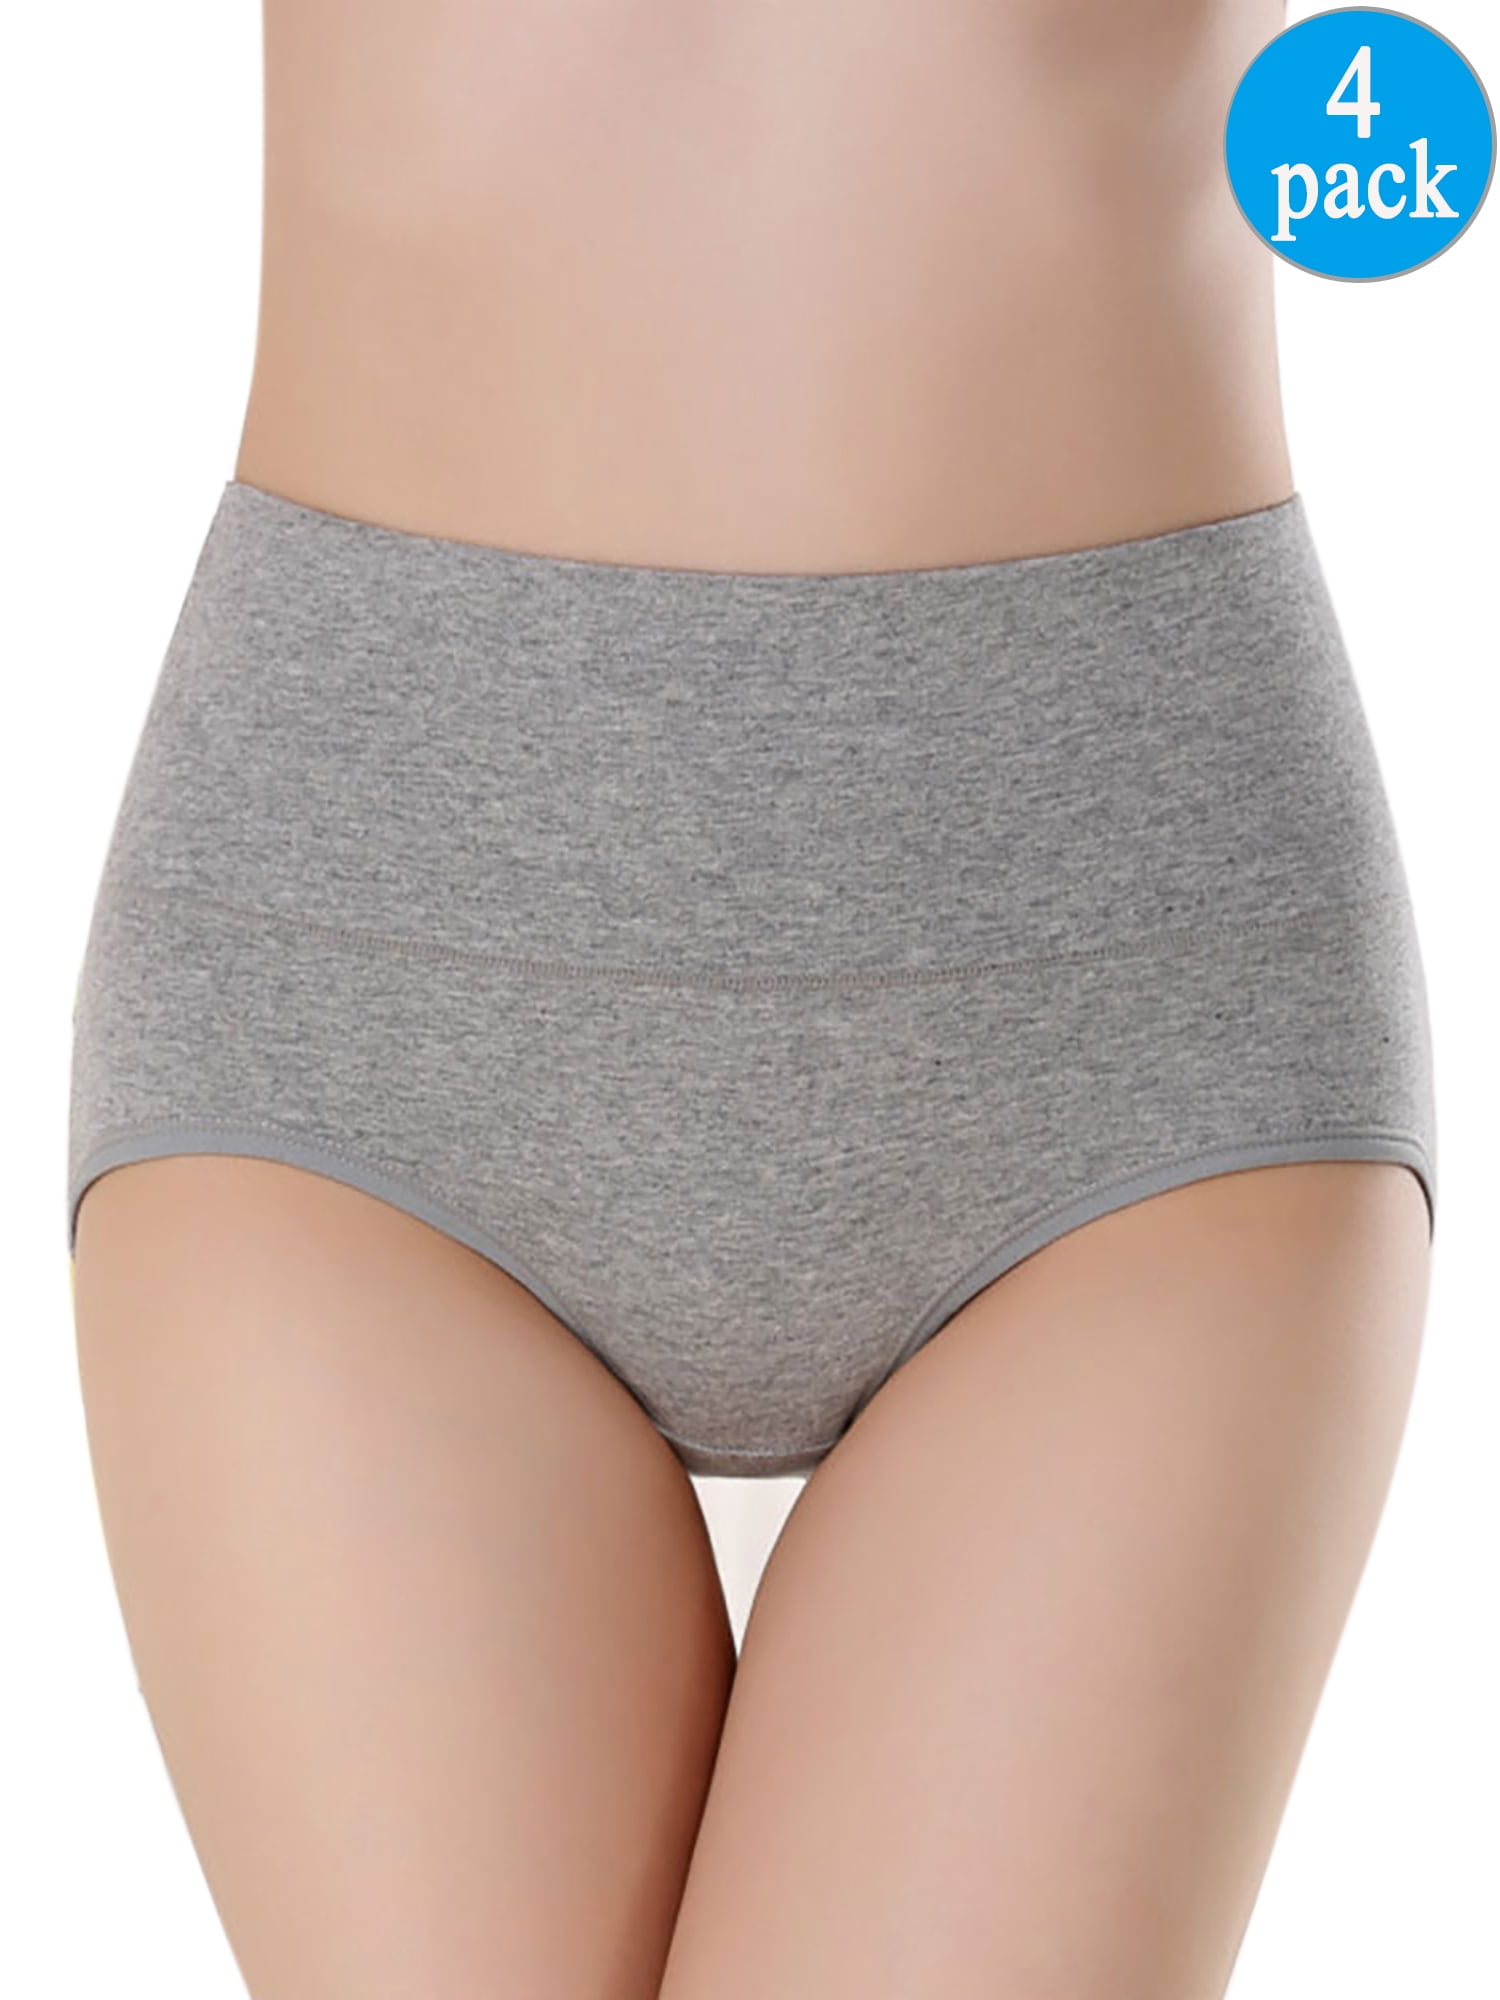 YaShaer Underwear Women High Waist Briefs Cotton Bamboo Modal Panties C Section